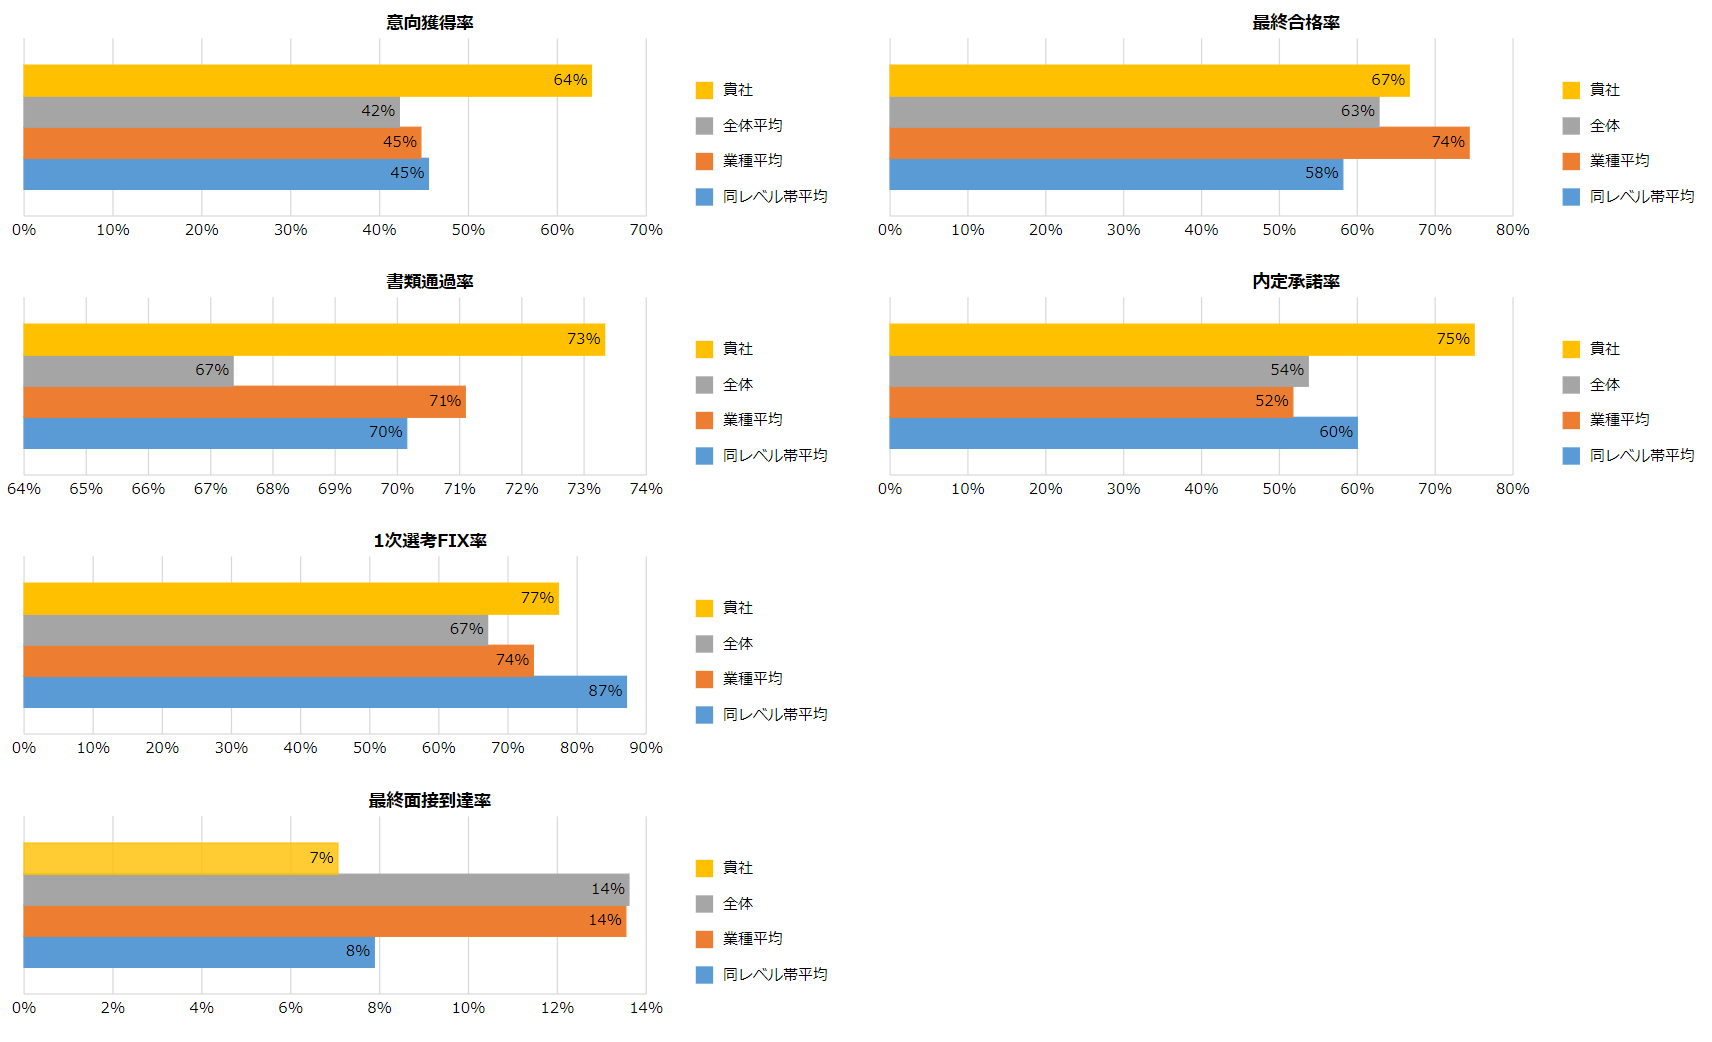 krewDashboardで選考プロセスの詳細データを全体平均と比較したものを企業ごとに可視化